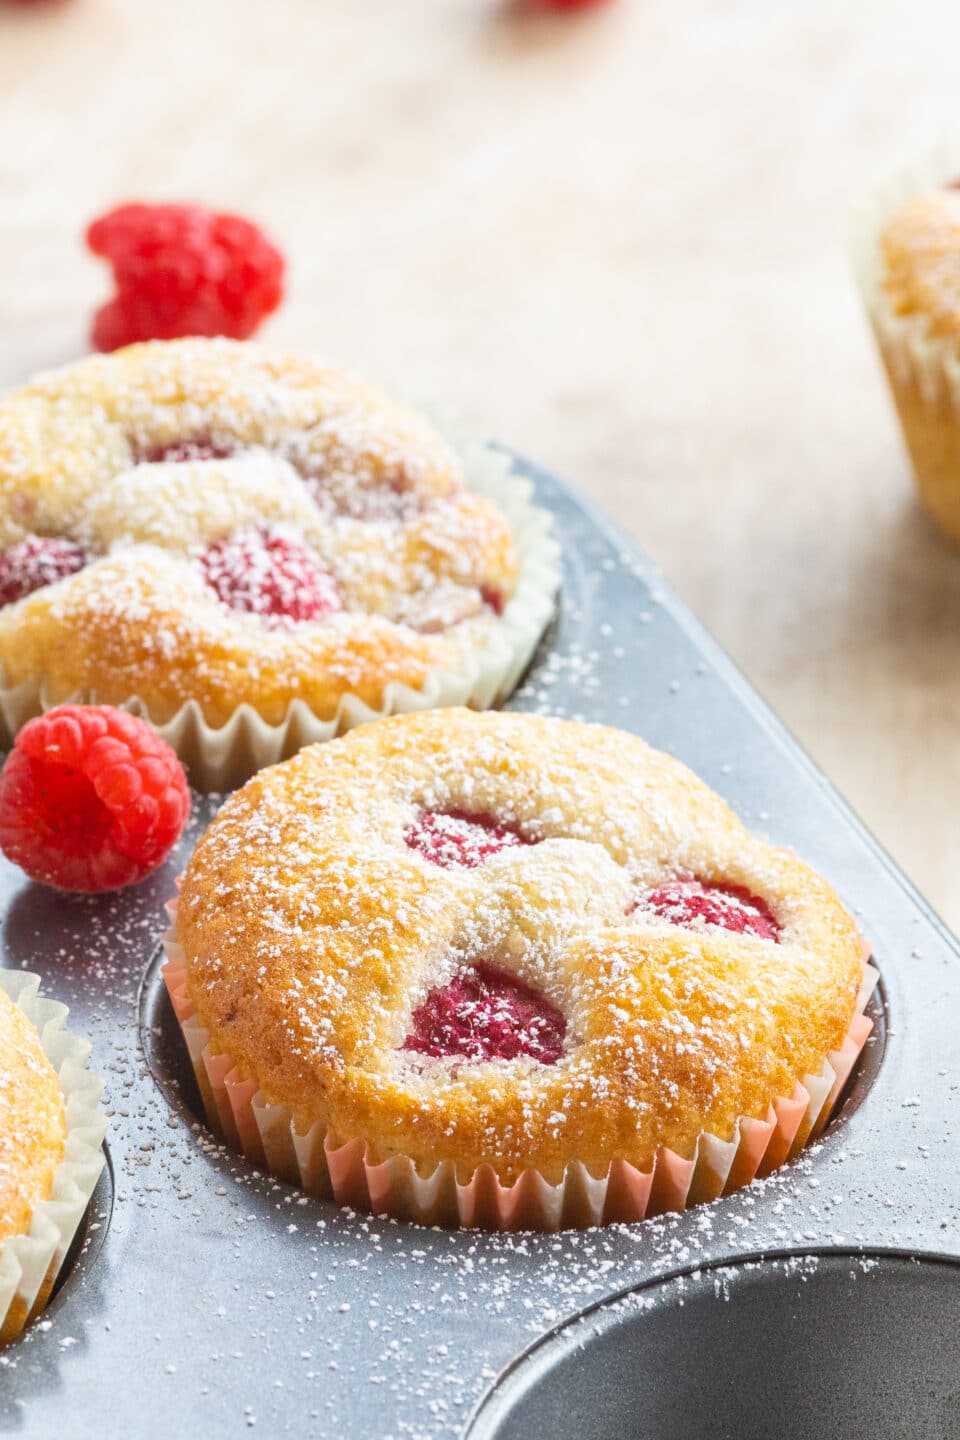 Raspberry Muffin Recipe with Fresh Fruits